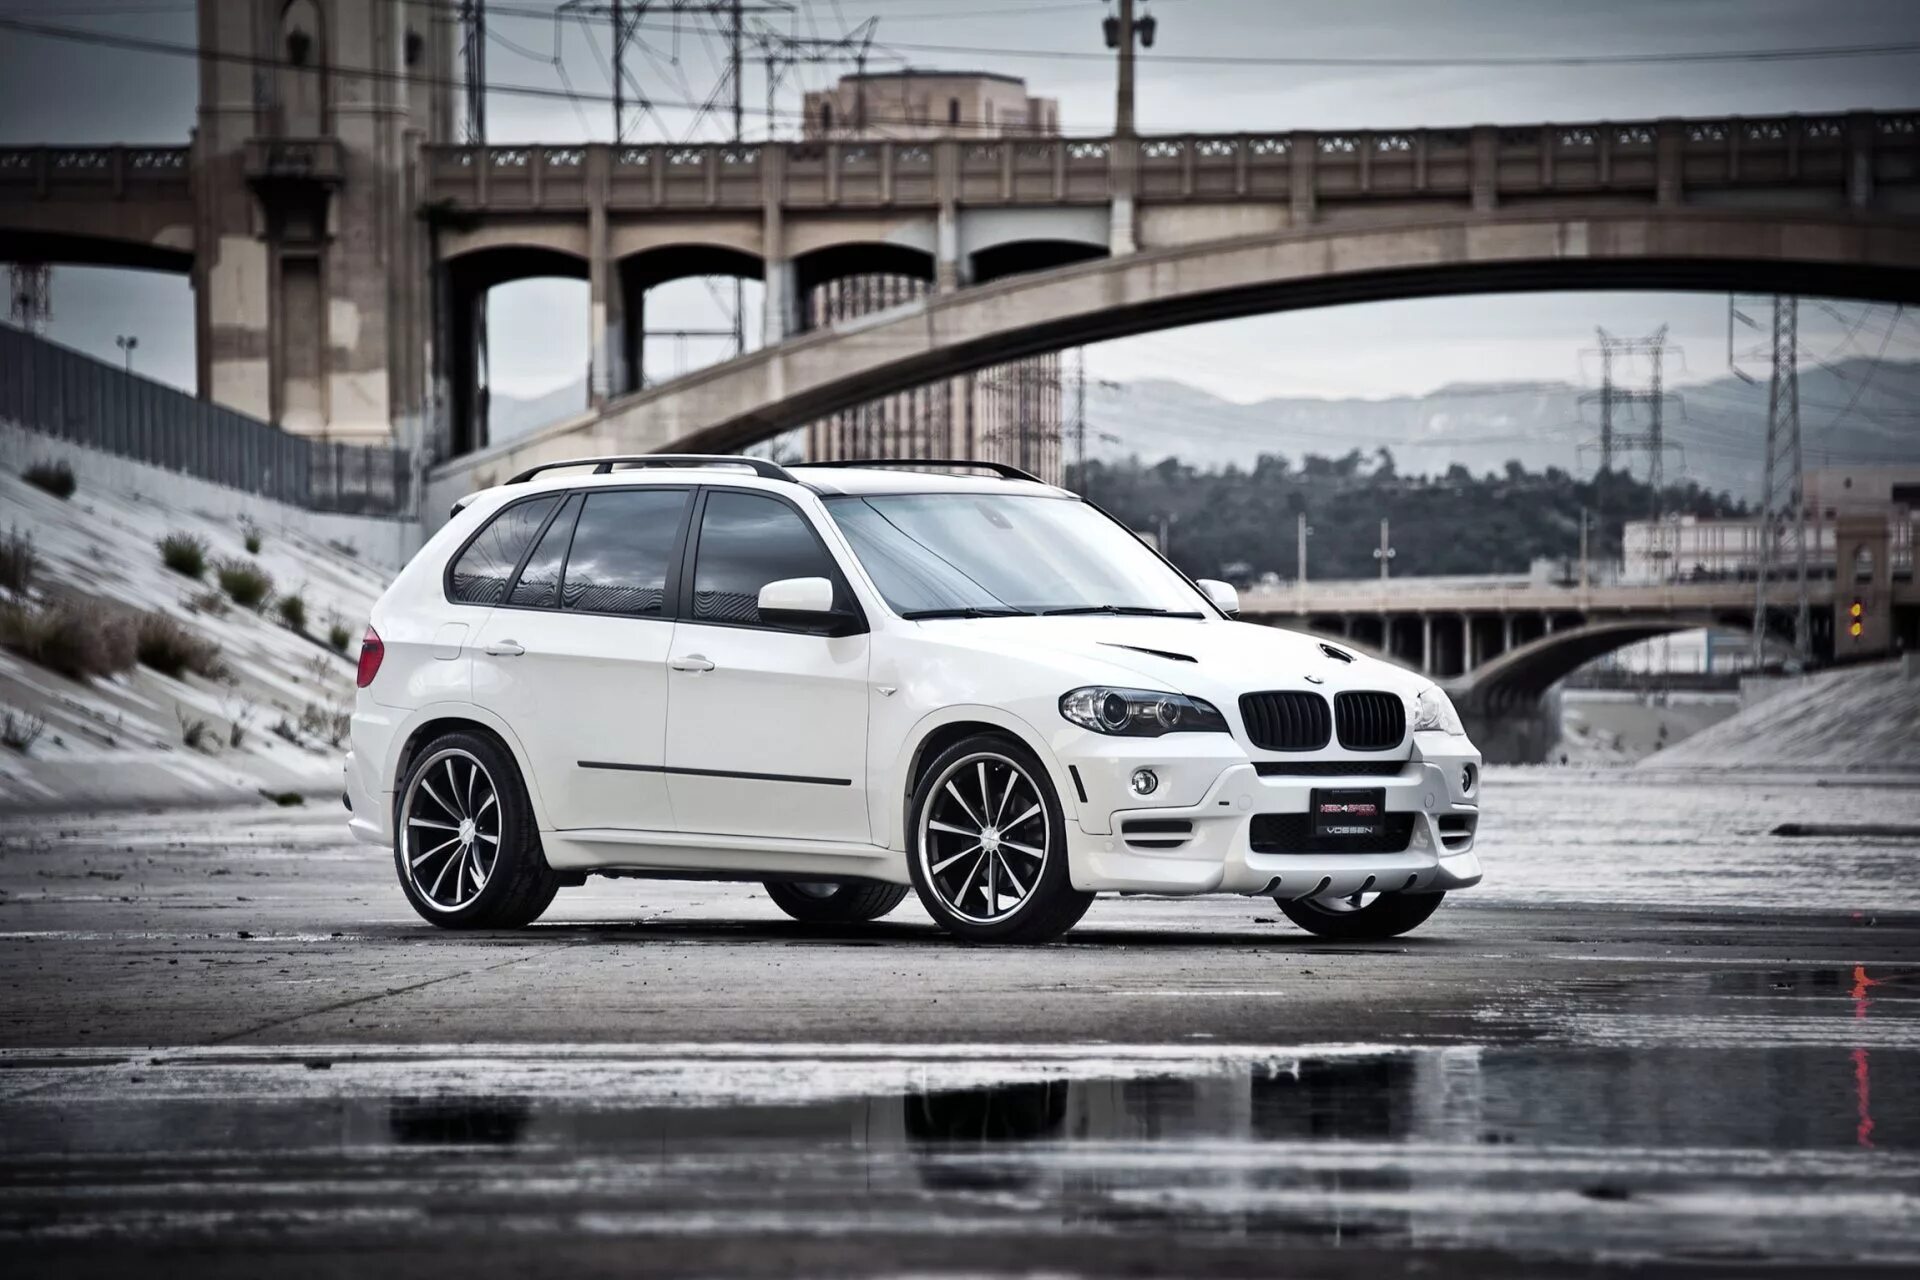 4x x 5 c. BMW x5 e70 White. BMW x5 e70 белый. Белый БМВ е70. BMW x5 белая.